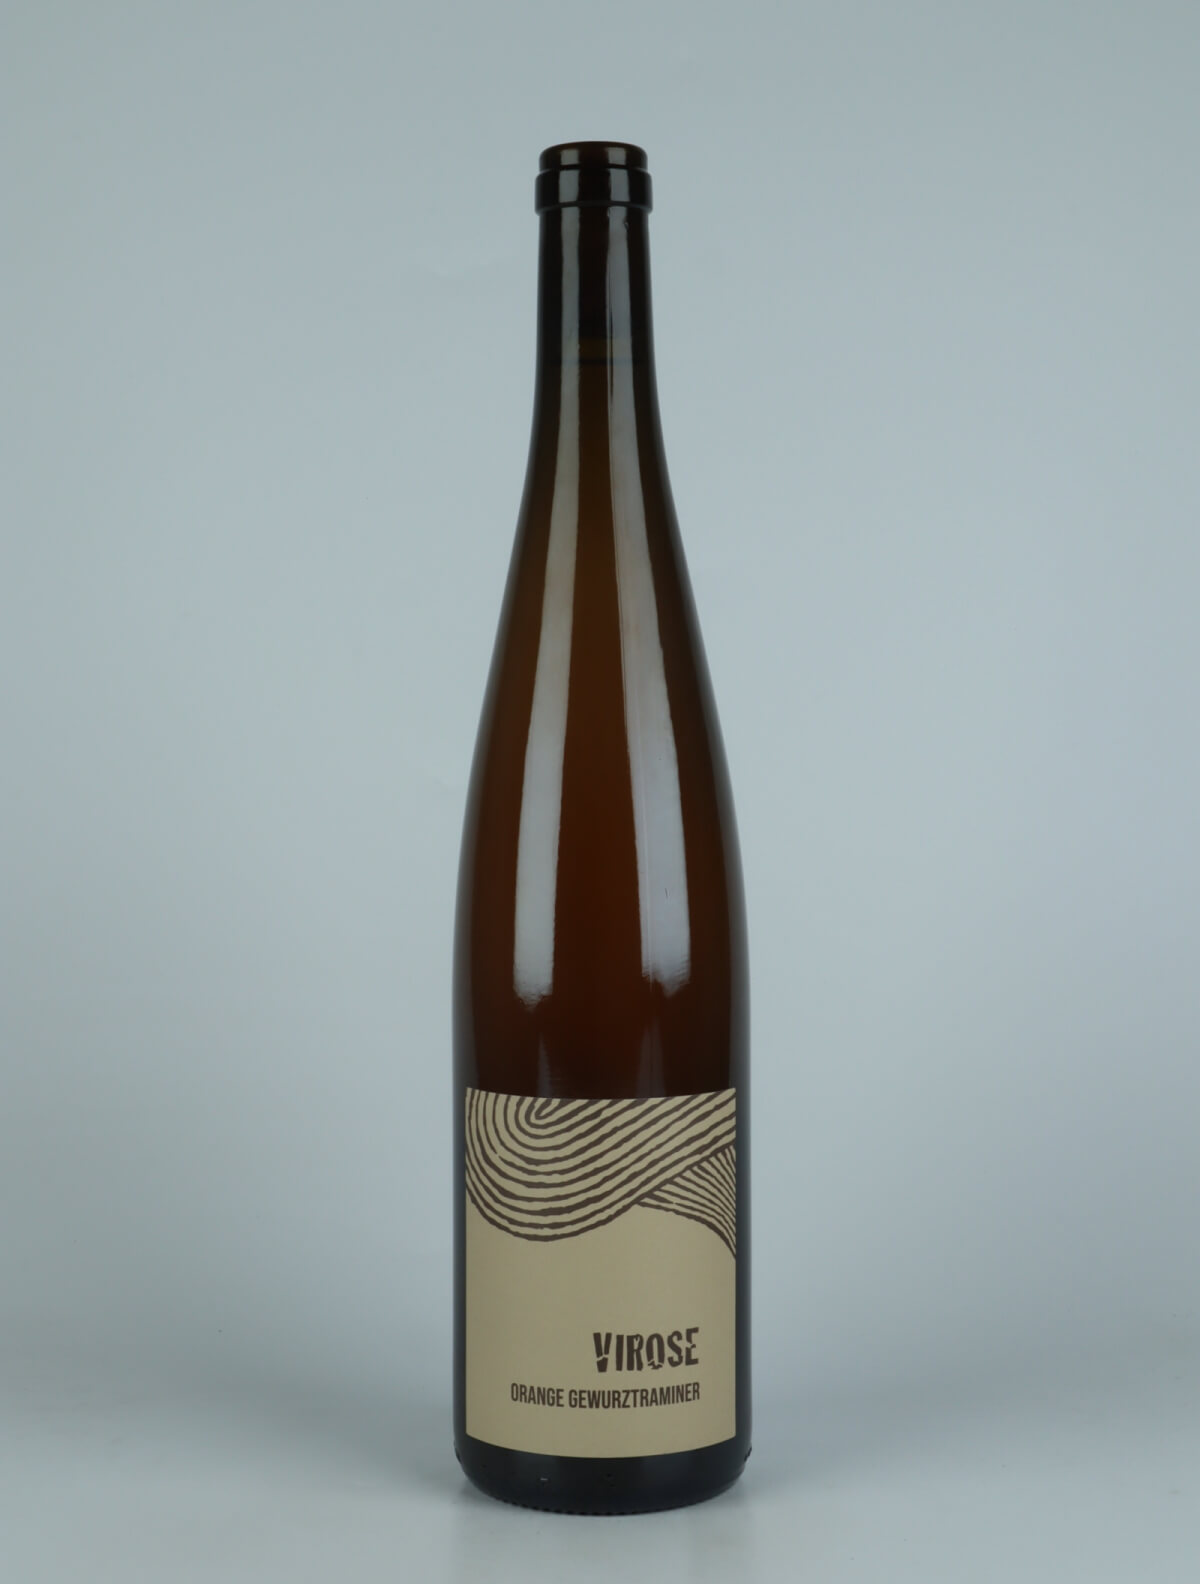 A bottle 2022 Virose Orange wine from Ruhlmann Dirringer, Alsace in France